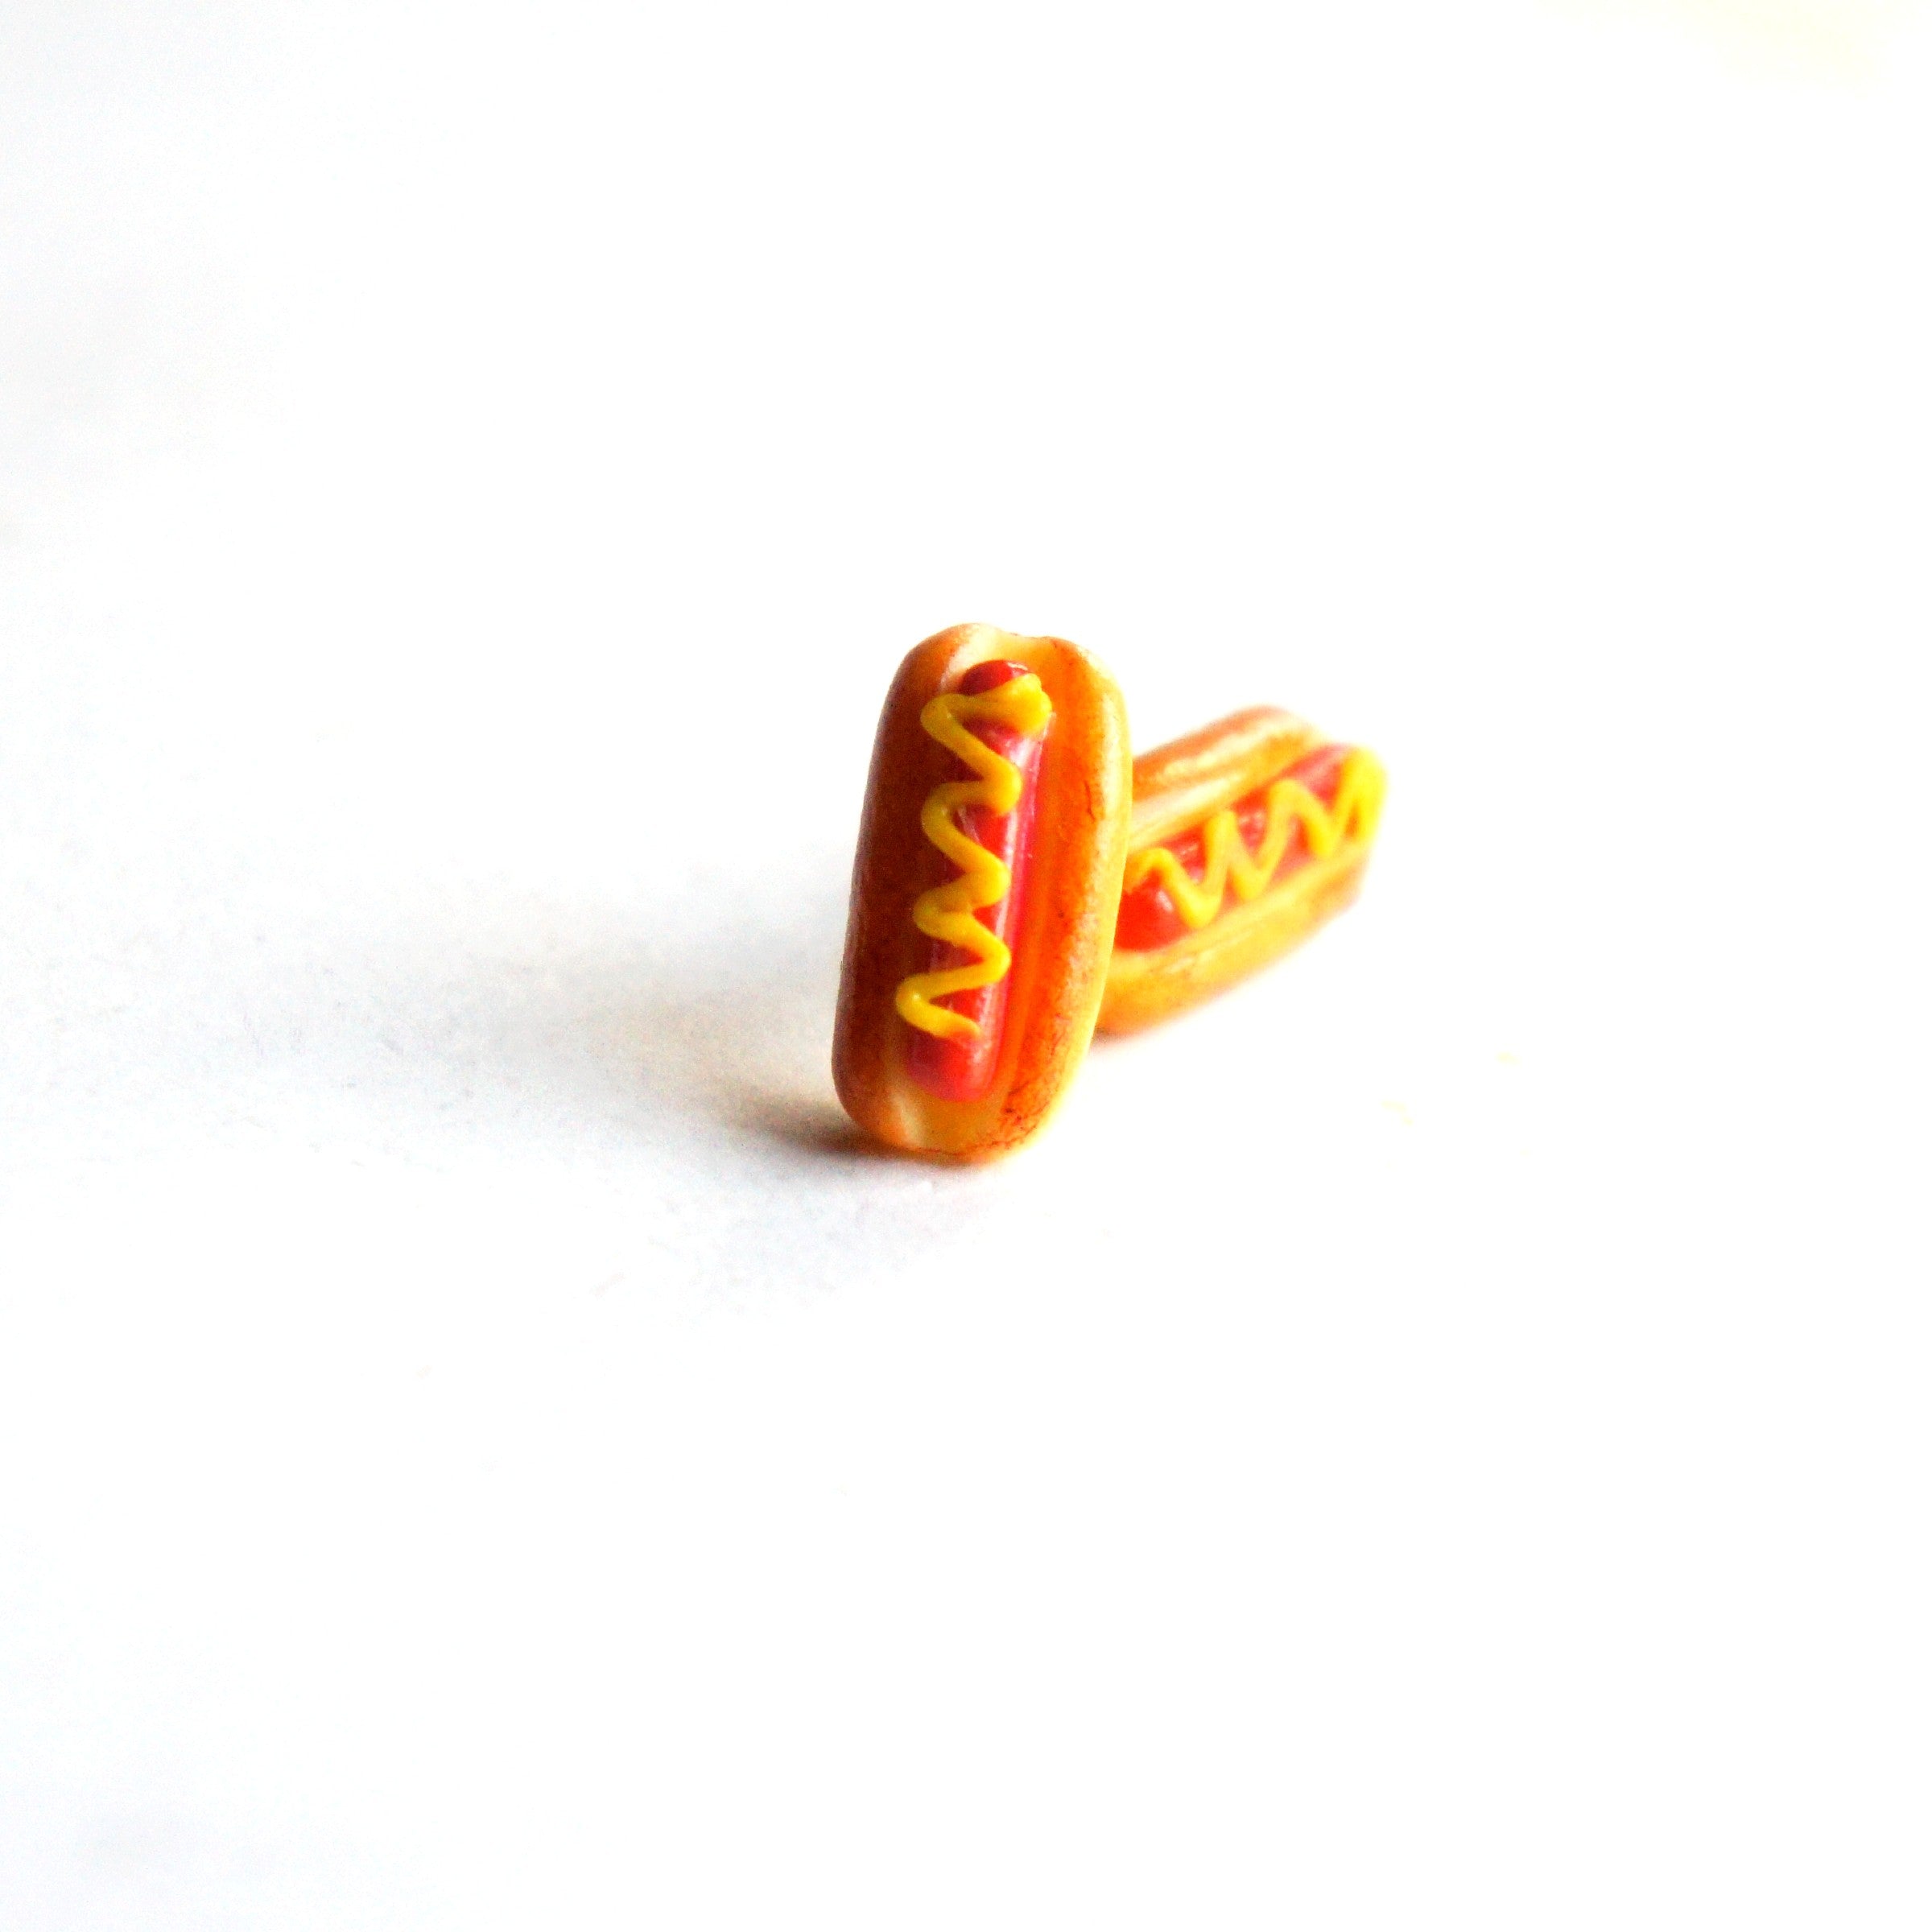 Hotdog Sandwich Earrings - Jillicious charms and accessories